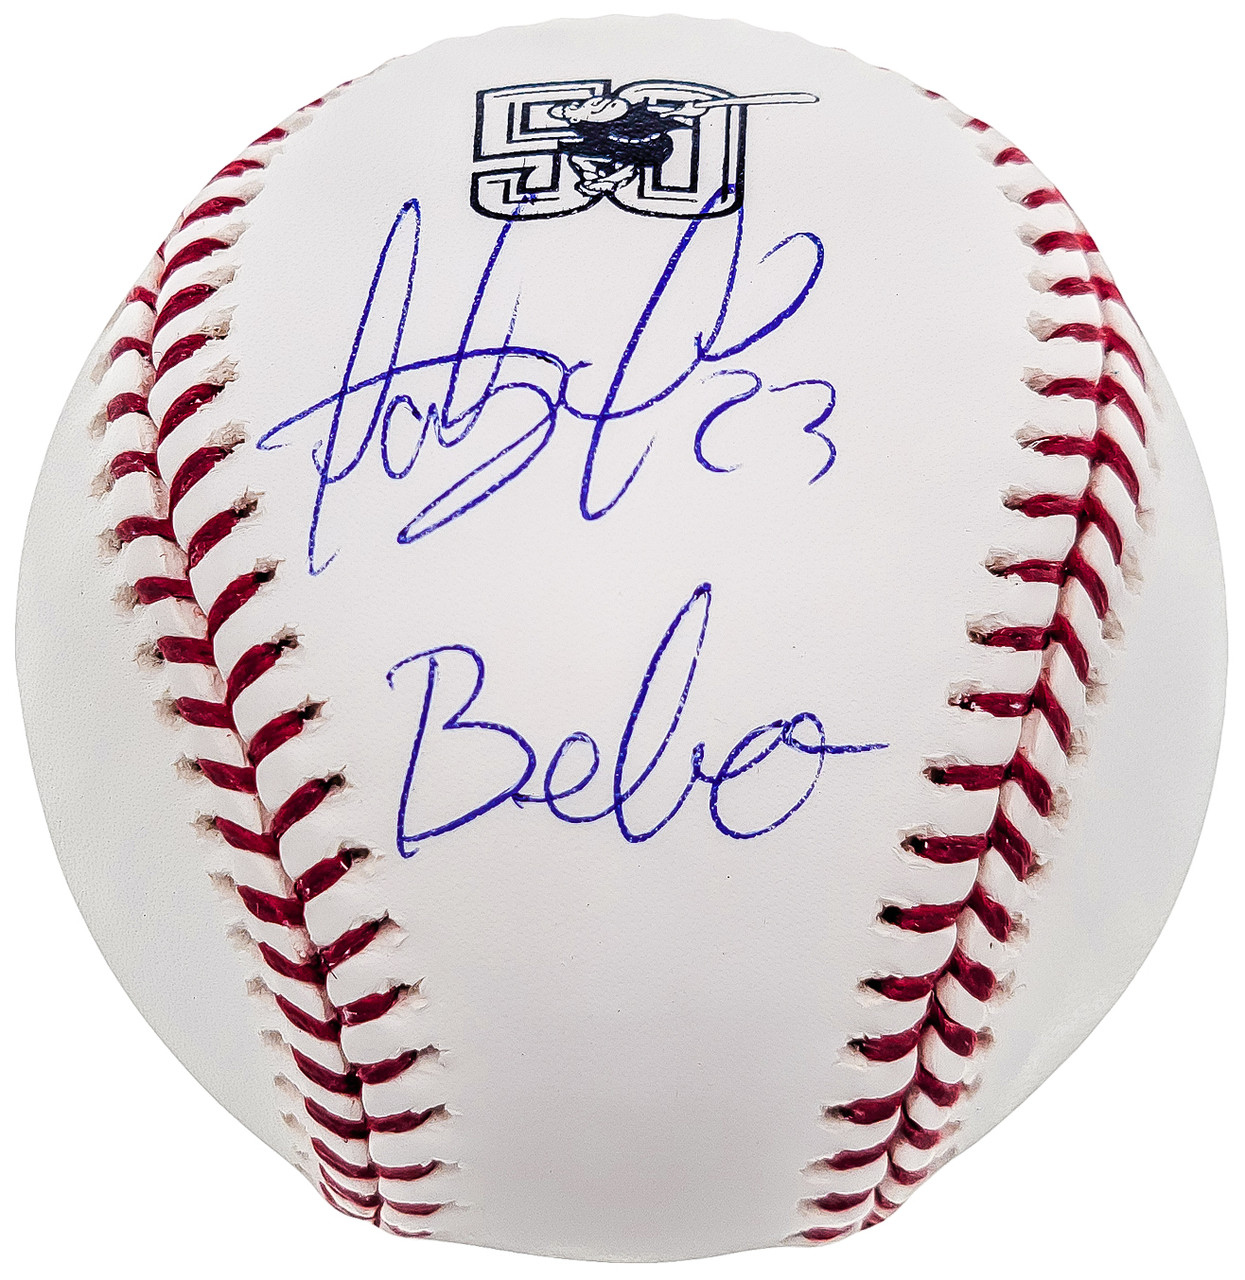 MLB Youth Foundation Golf Auction - Fernando Tatis Jr. Autographed